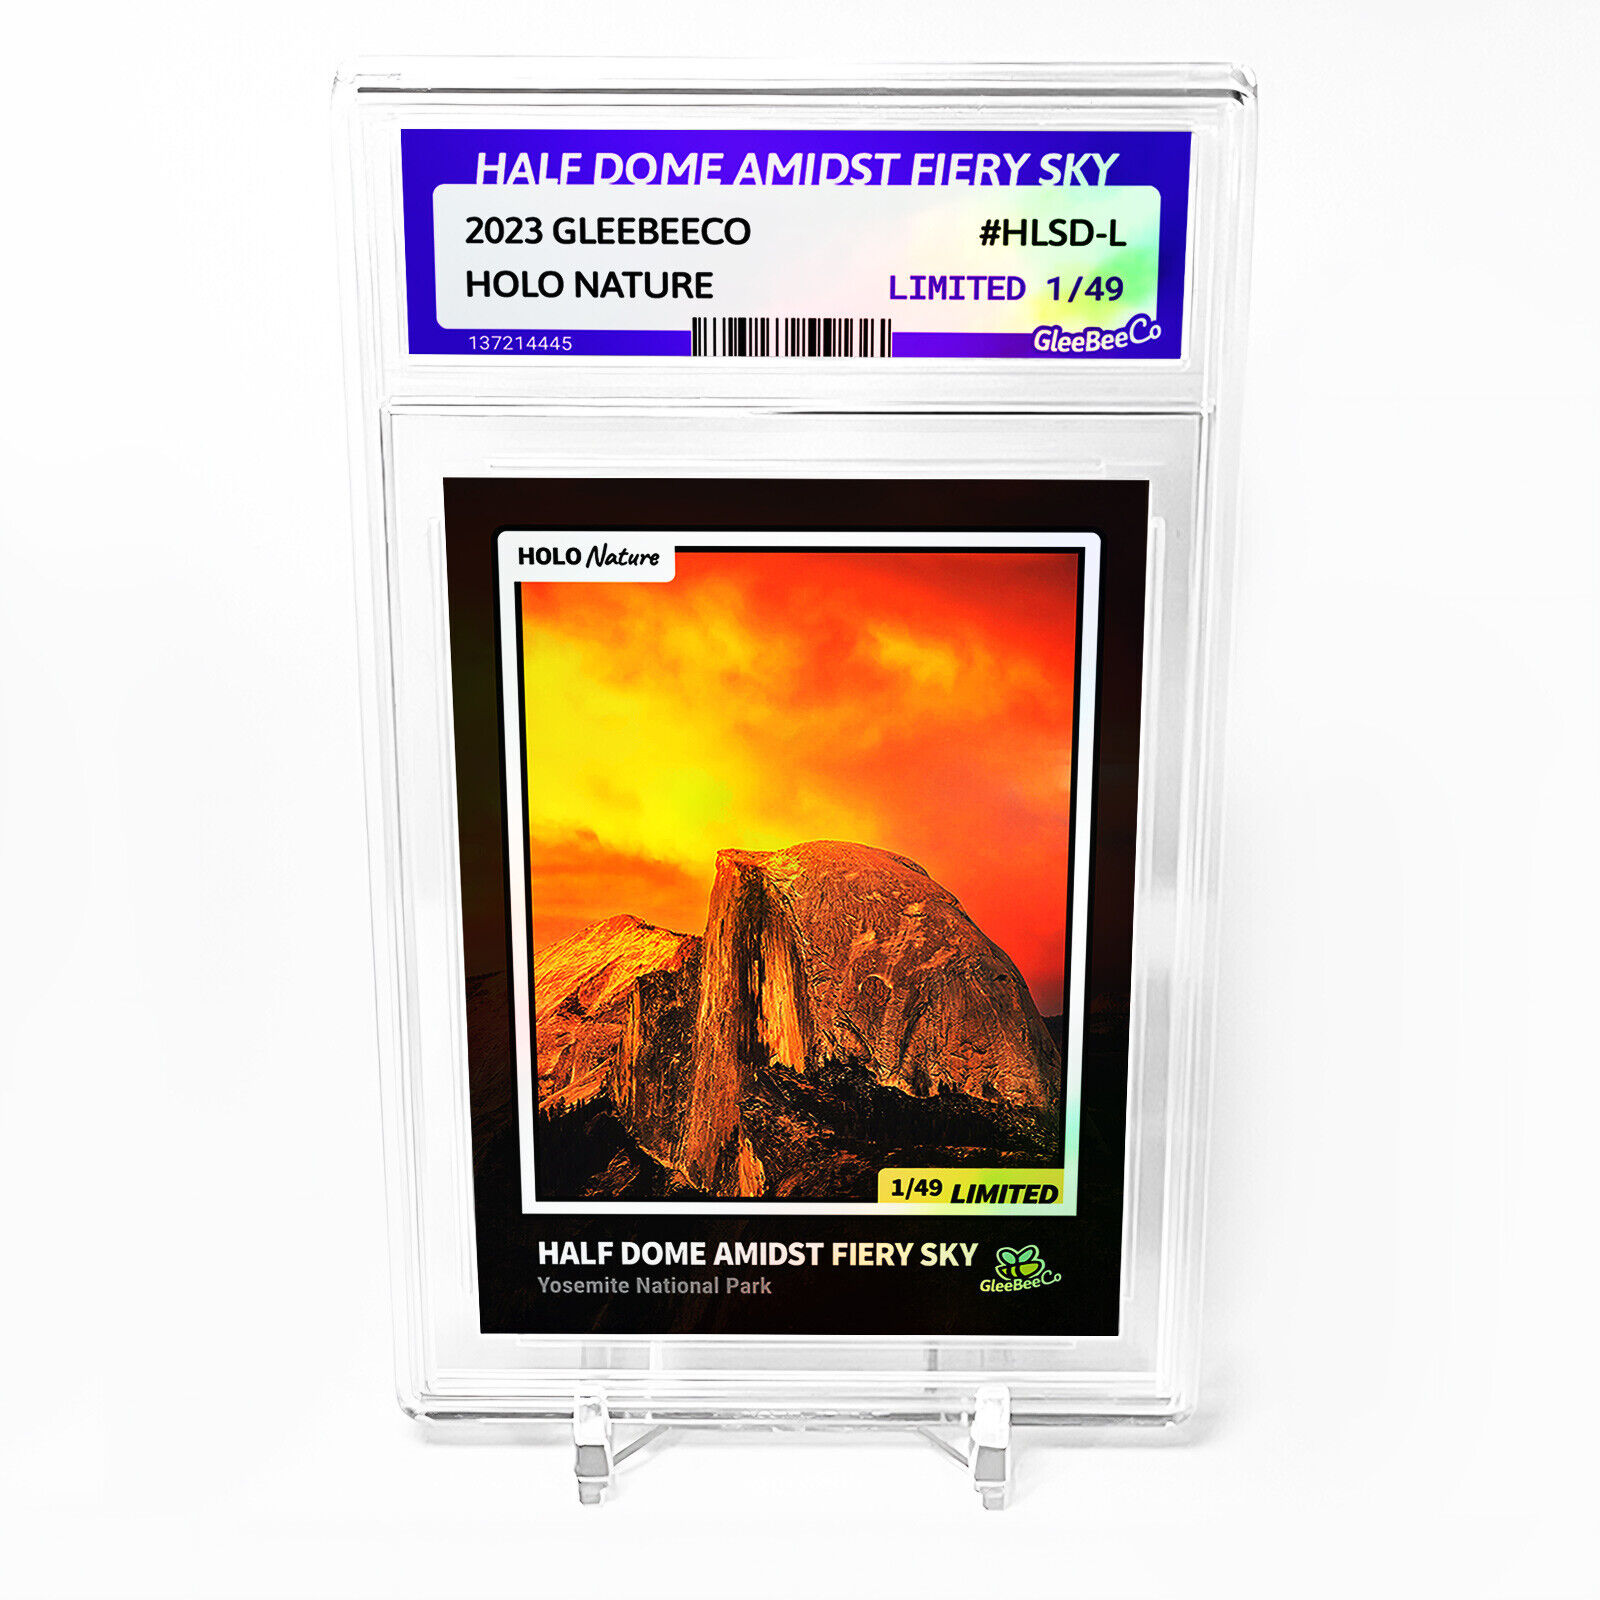 HALF DOME AMIDST FIERY SKY Card 2023 GleeBeeCo Holo Nature #HLSD-L /49 STUNNING